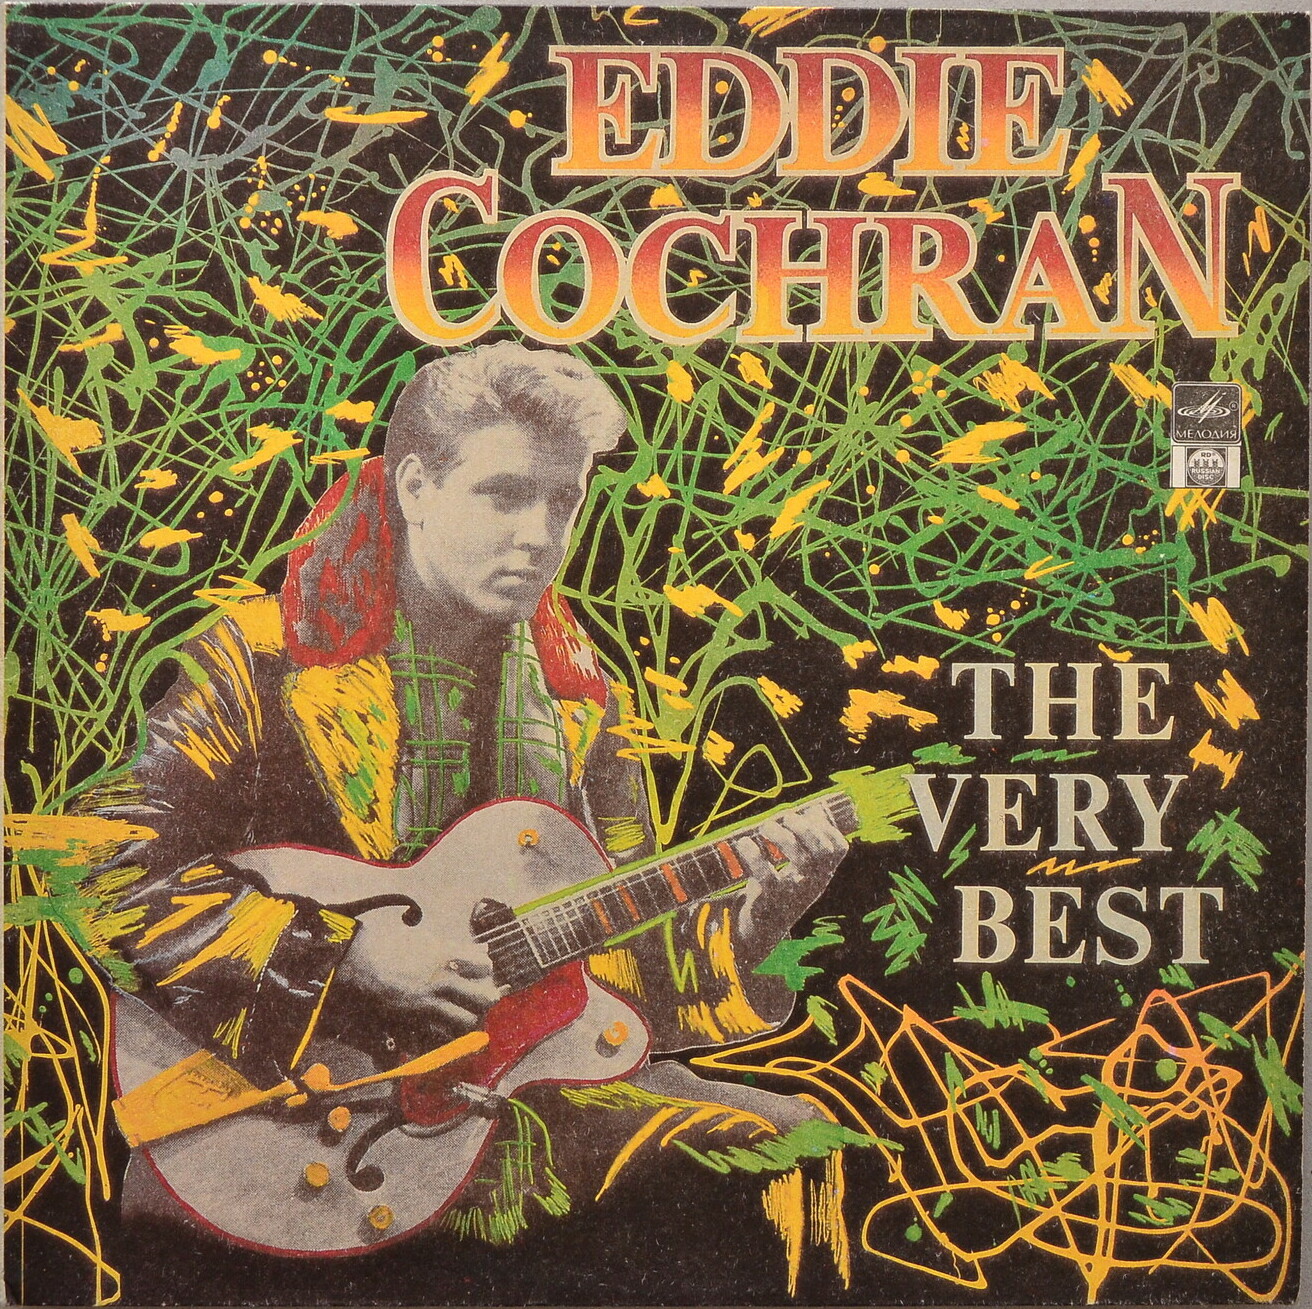 EDDIE COCHRAN – “The Very Best”